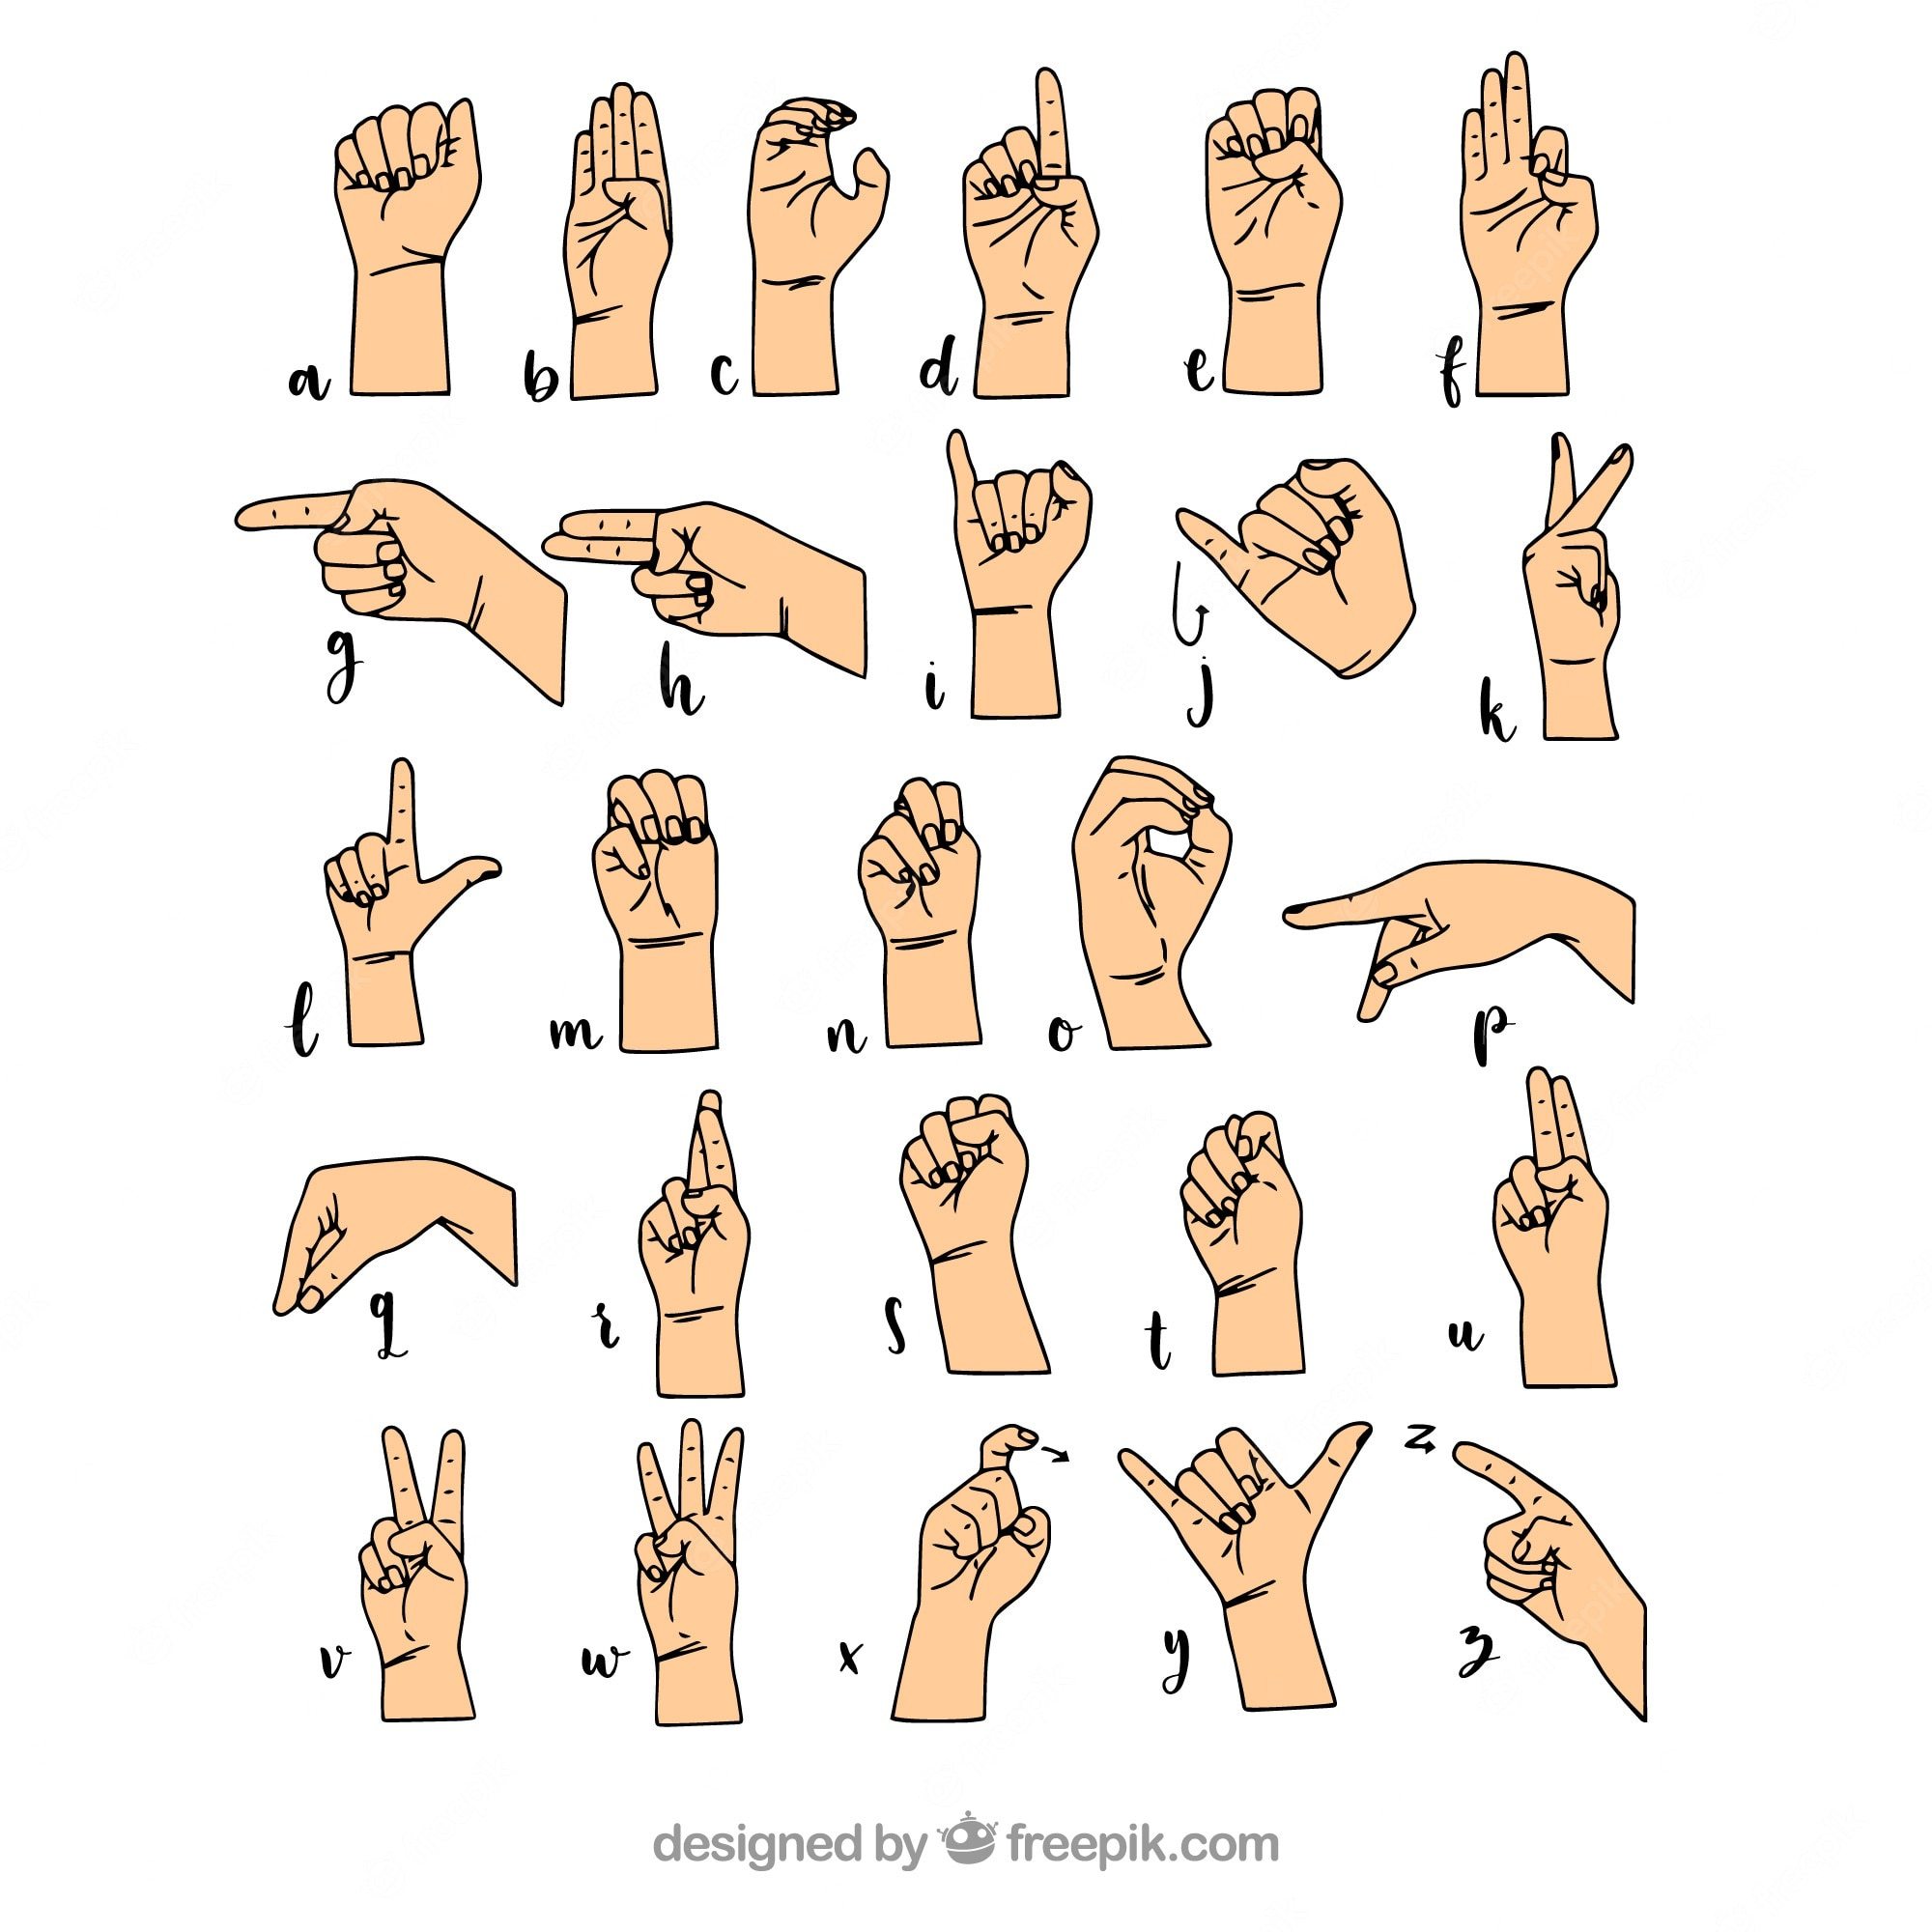 BSL (British Sign Language) - Class 12 - Quizizz